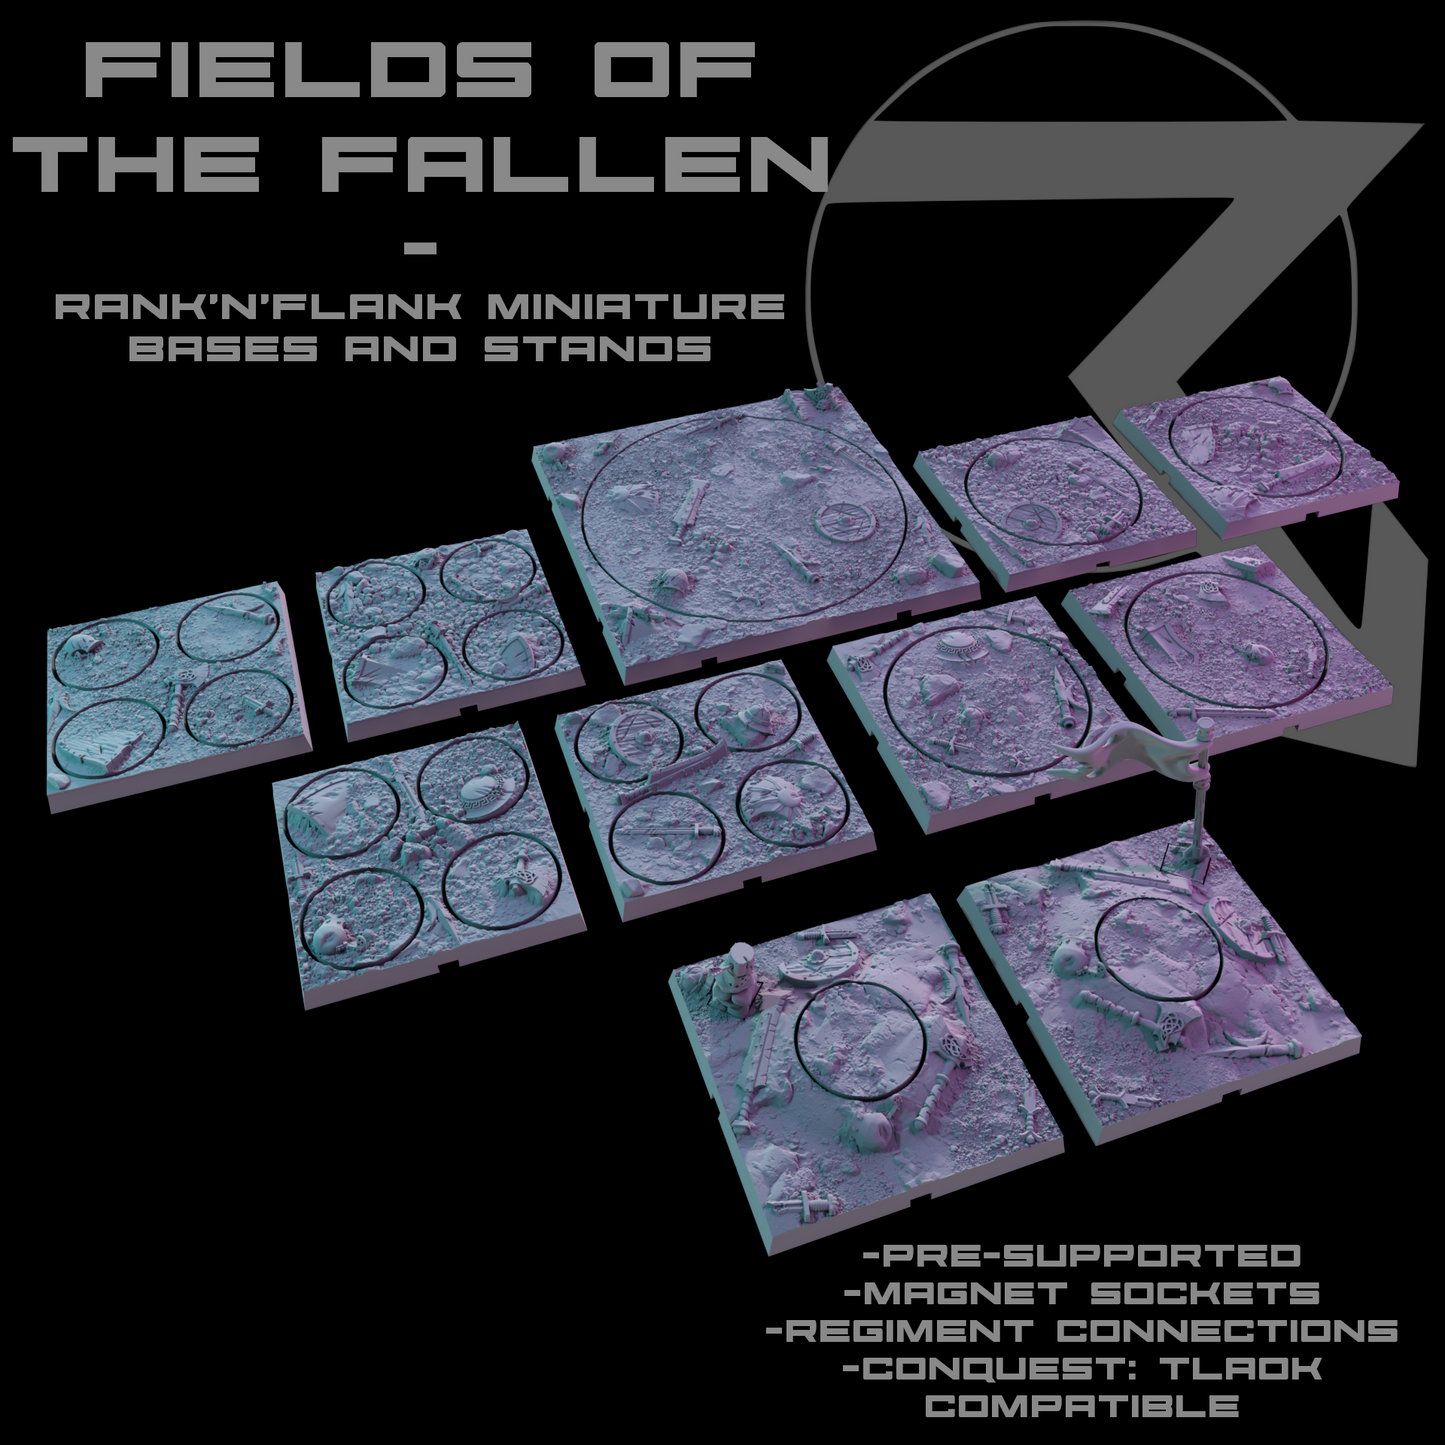 Miniature Bases - Rank'n'Flank - Fields of the Fallen